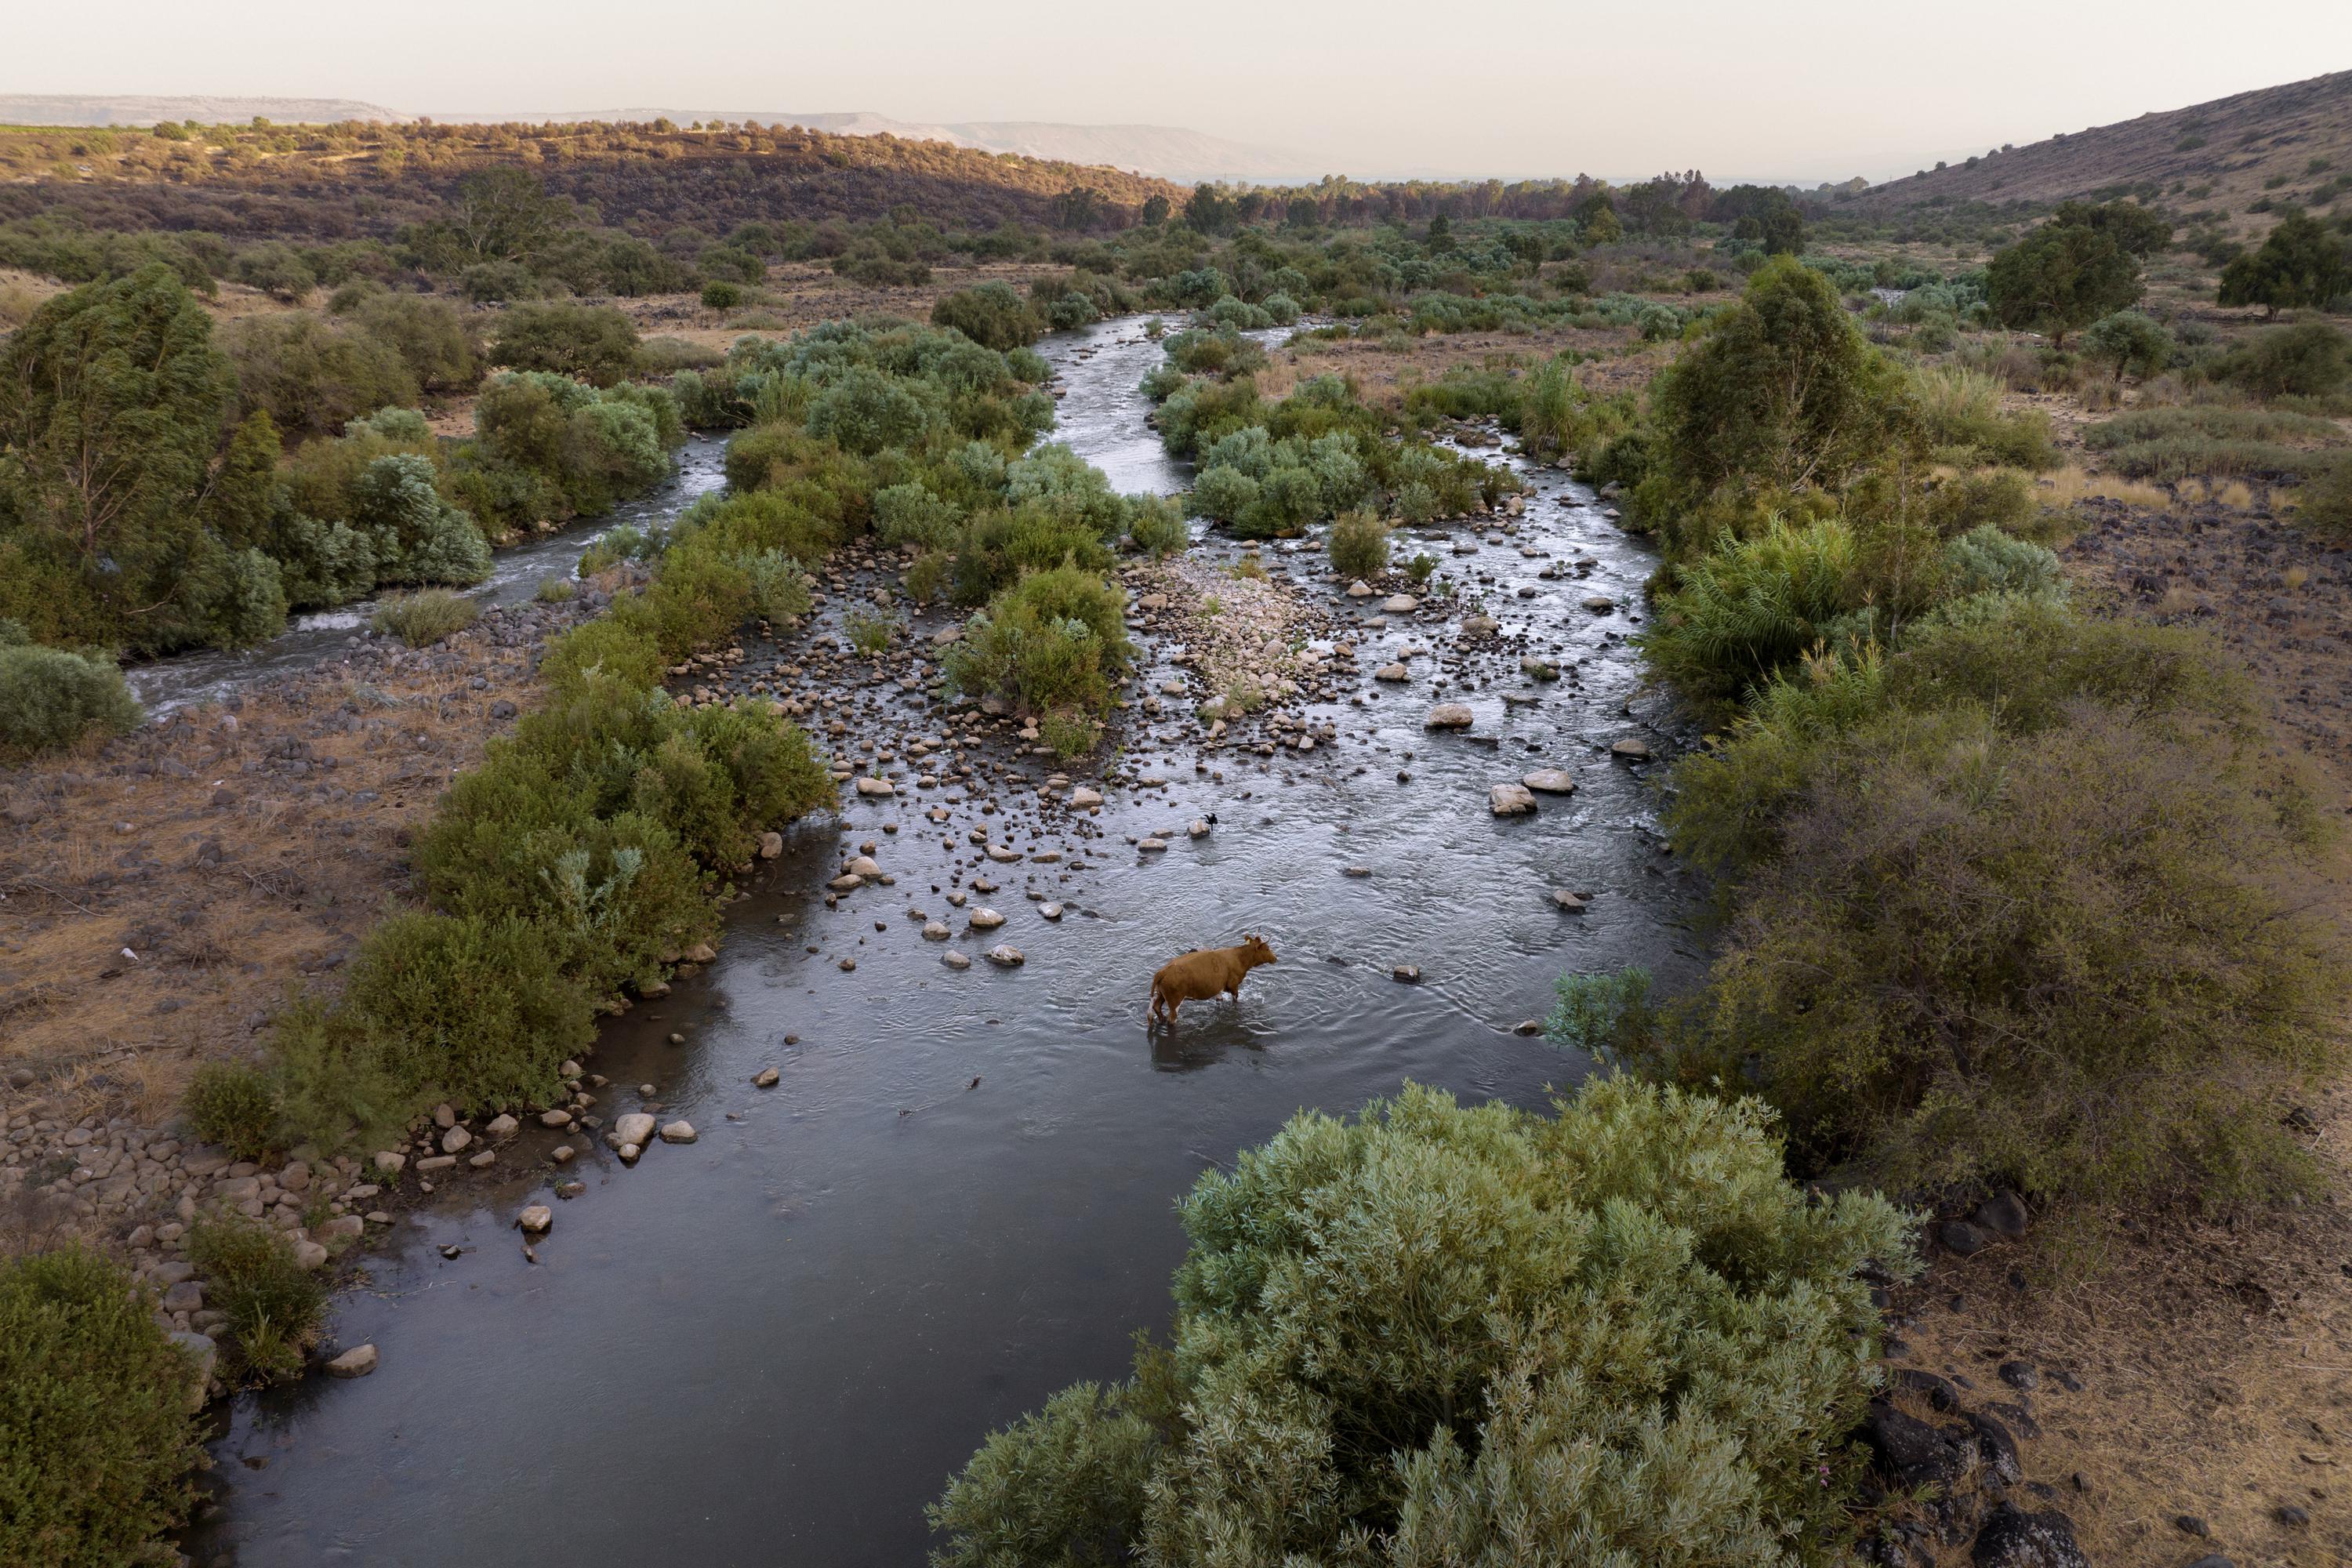 Jordan River, Jesus' baptism site, is today barely a trickle